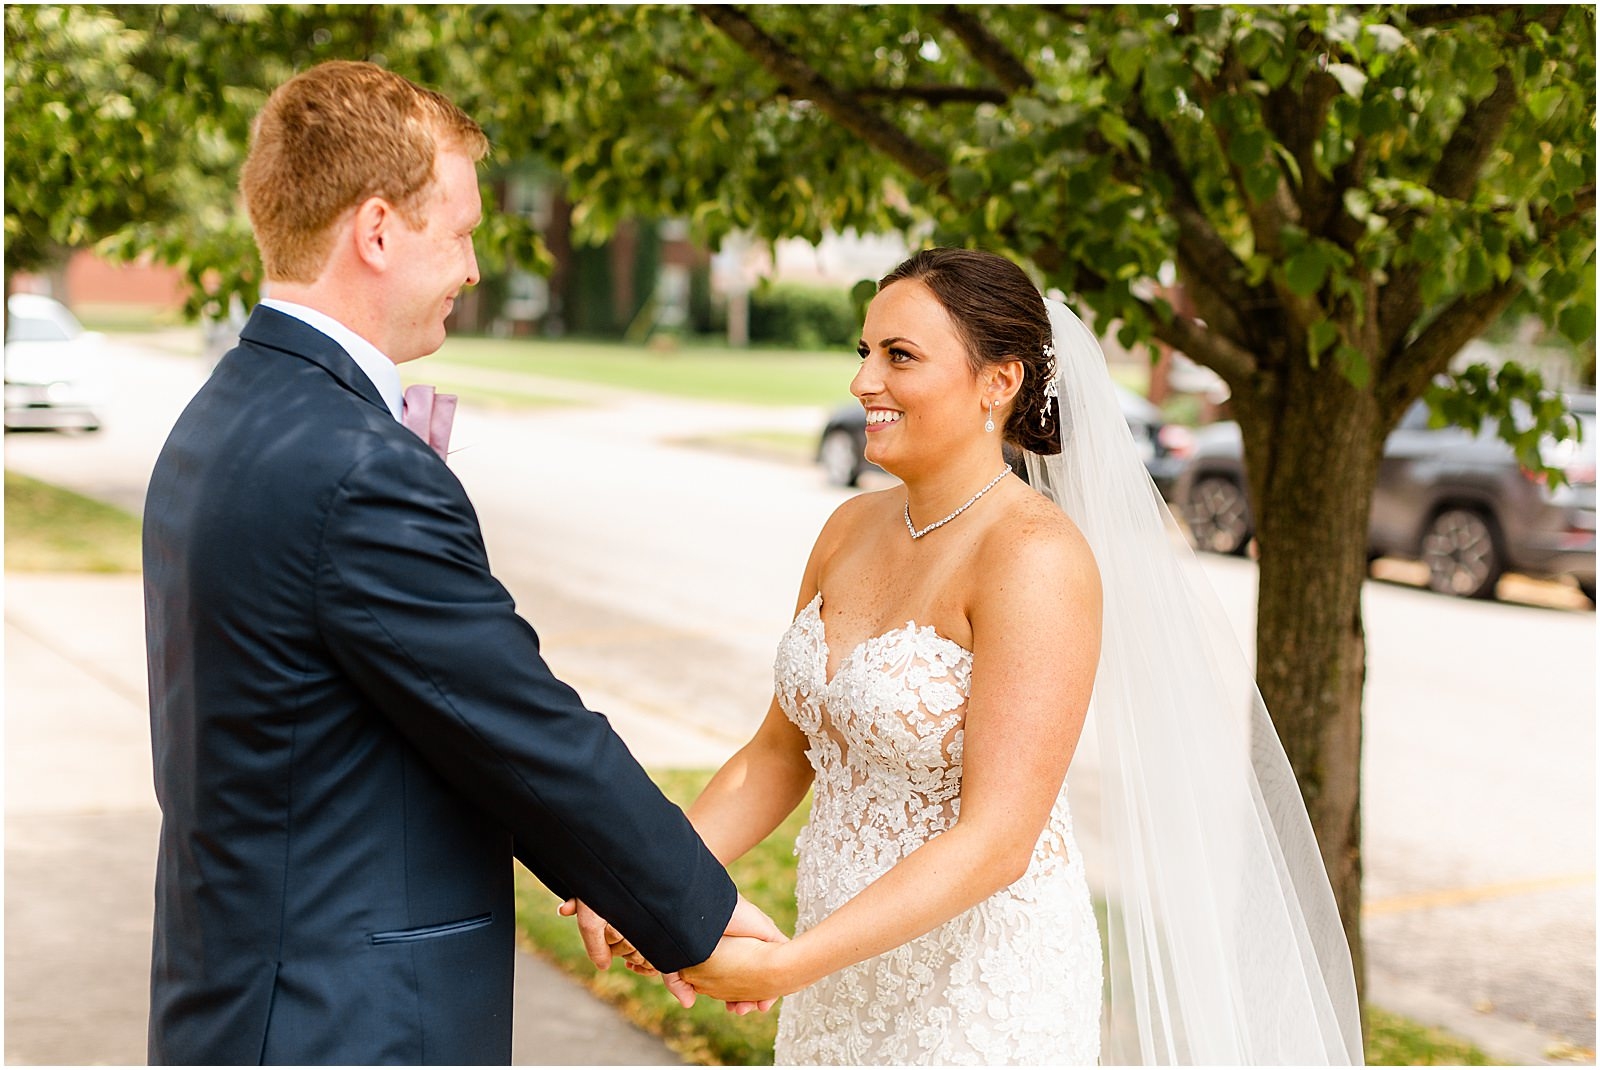 Deidra and Andrew | A Huntingburgh Indiana Wedding Bret and Brandie | Evansville Photographers | @bretandbrandie-0050.jpg